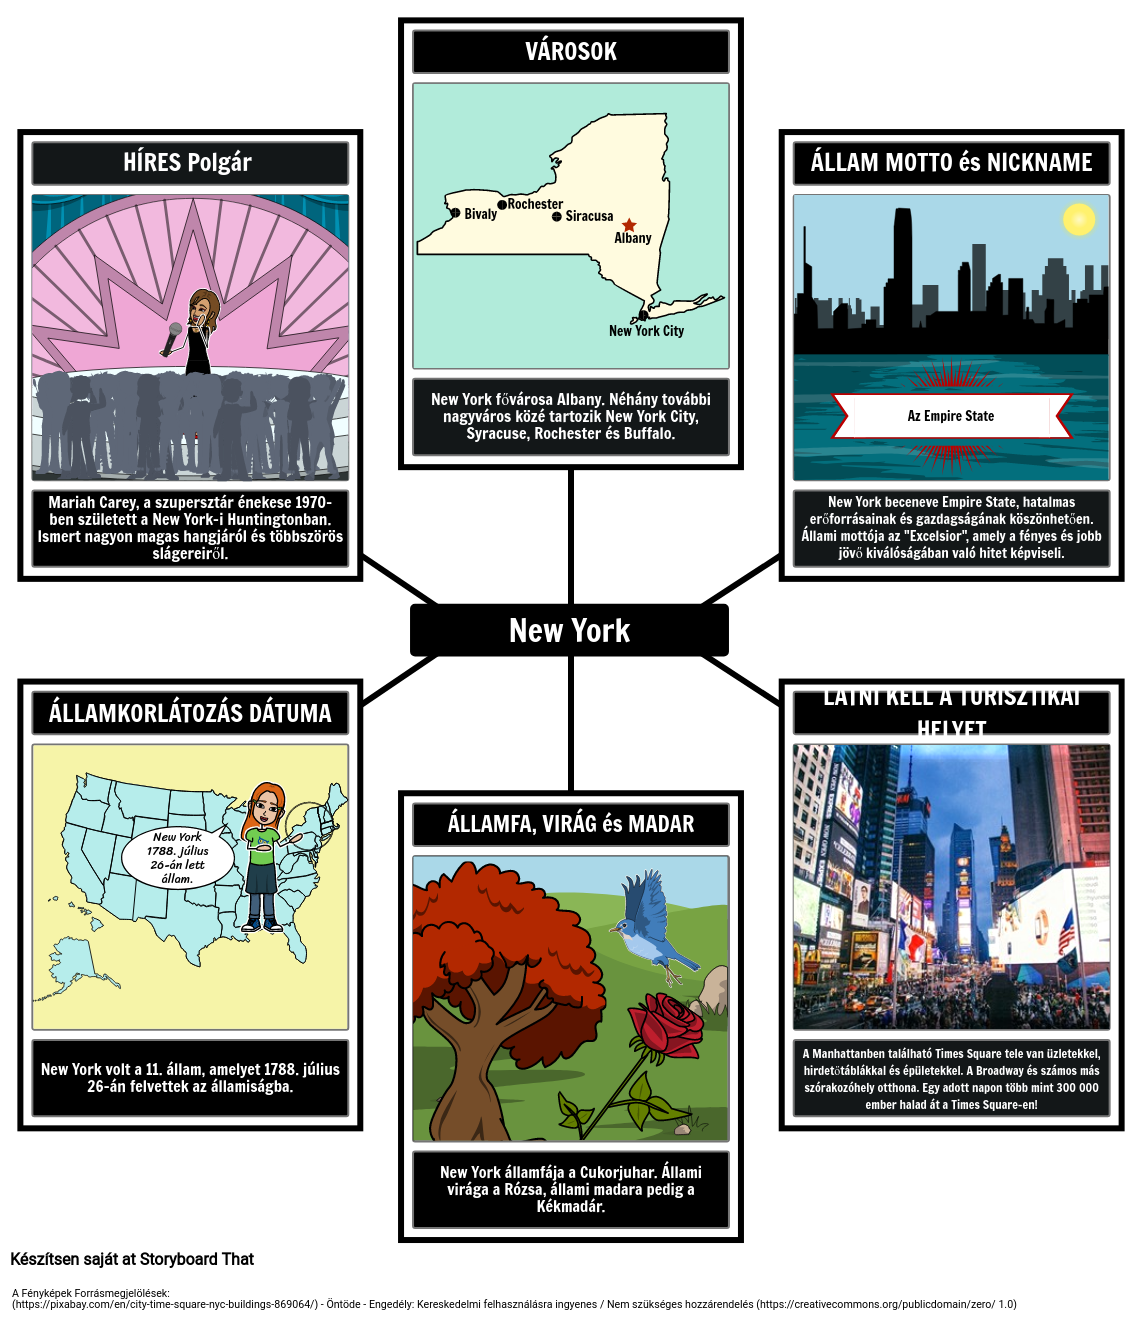 Amerikai állam profilja: New York